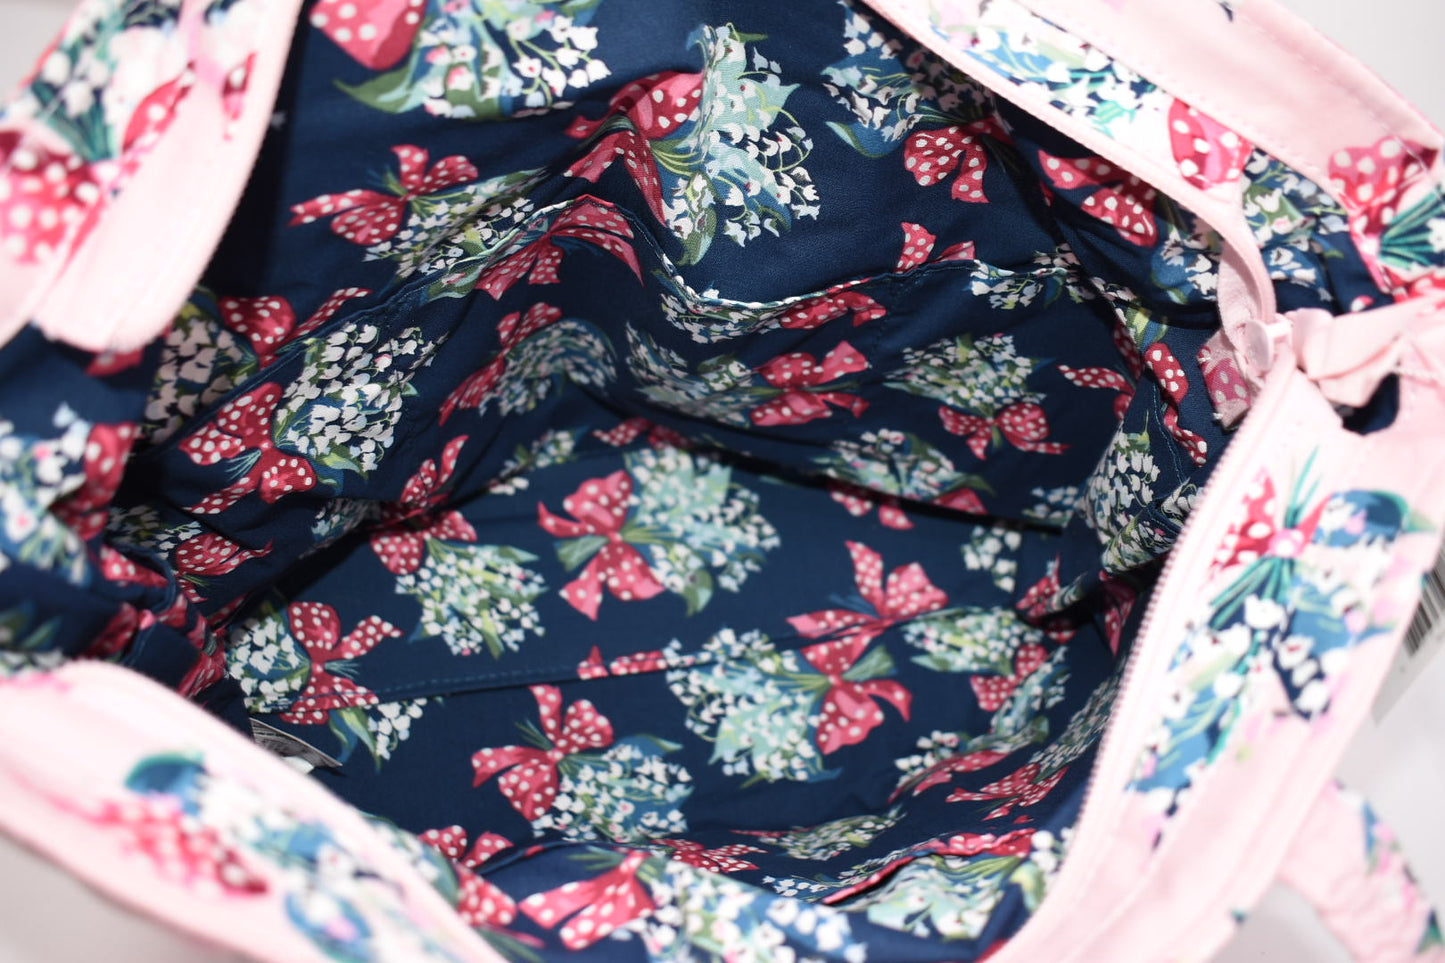 Vera Bradley Small Vera Tote Bag in "Happiness Returns Pink" Pattern